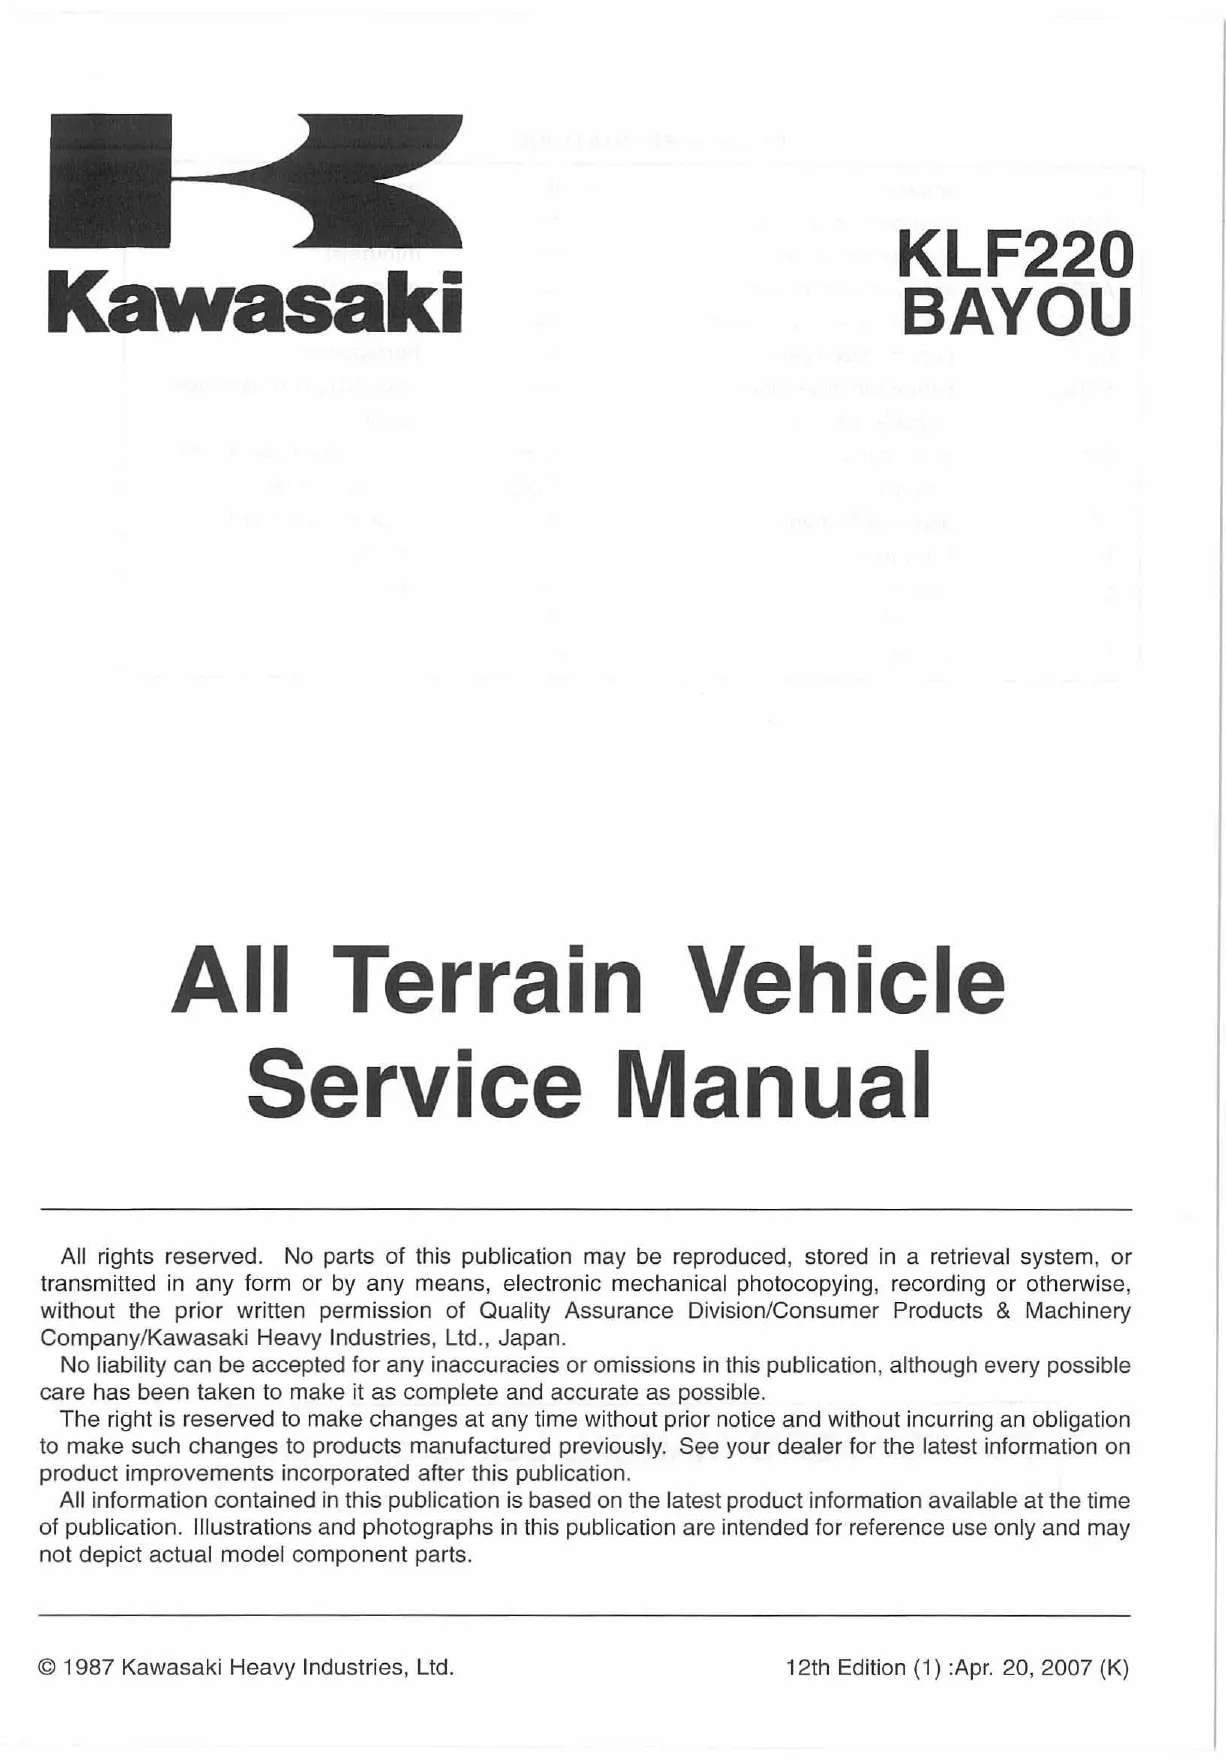 1988-2002 Kawasaki Bayou 220, KLF220A repair manual Preview image 3